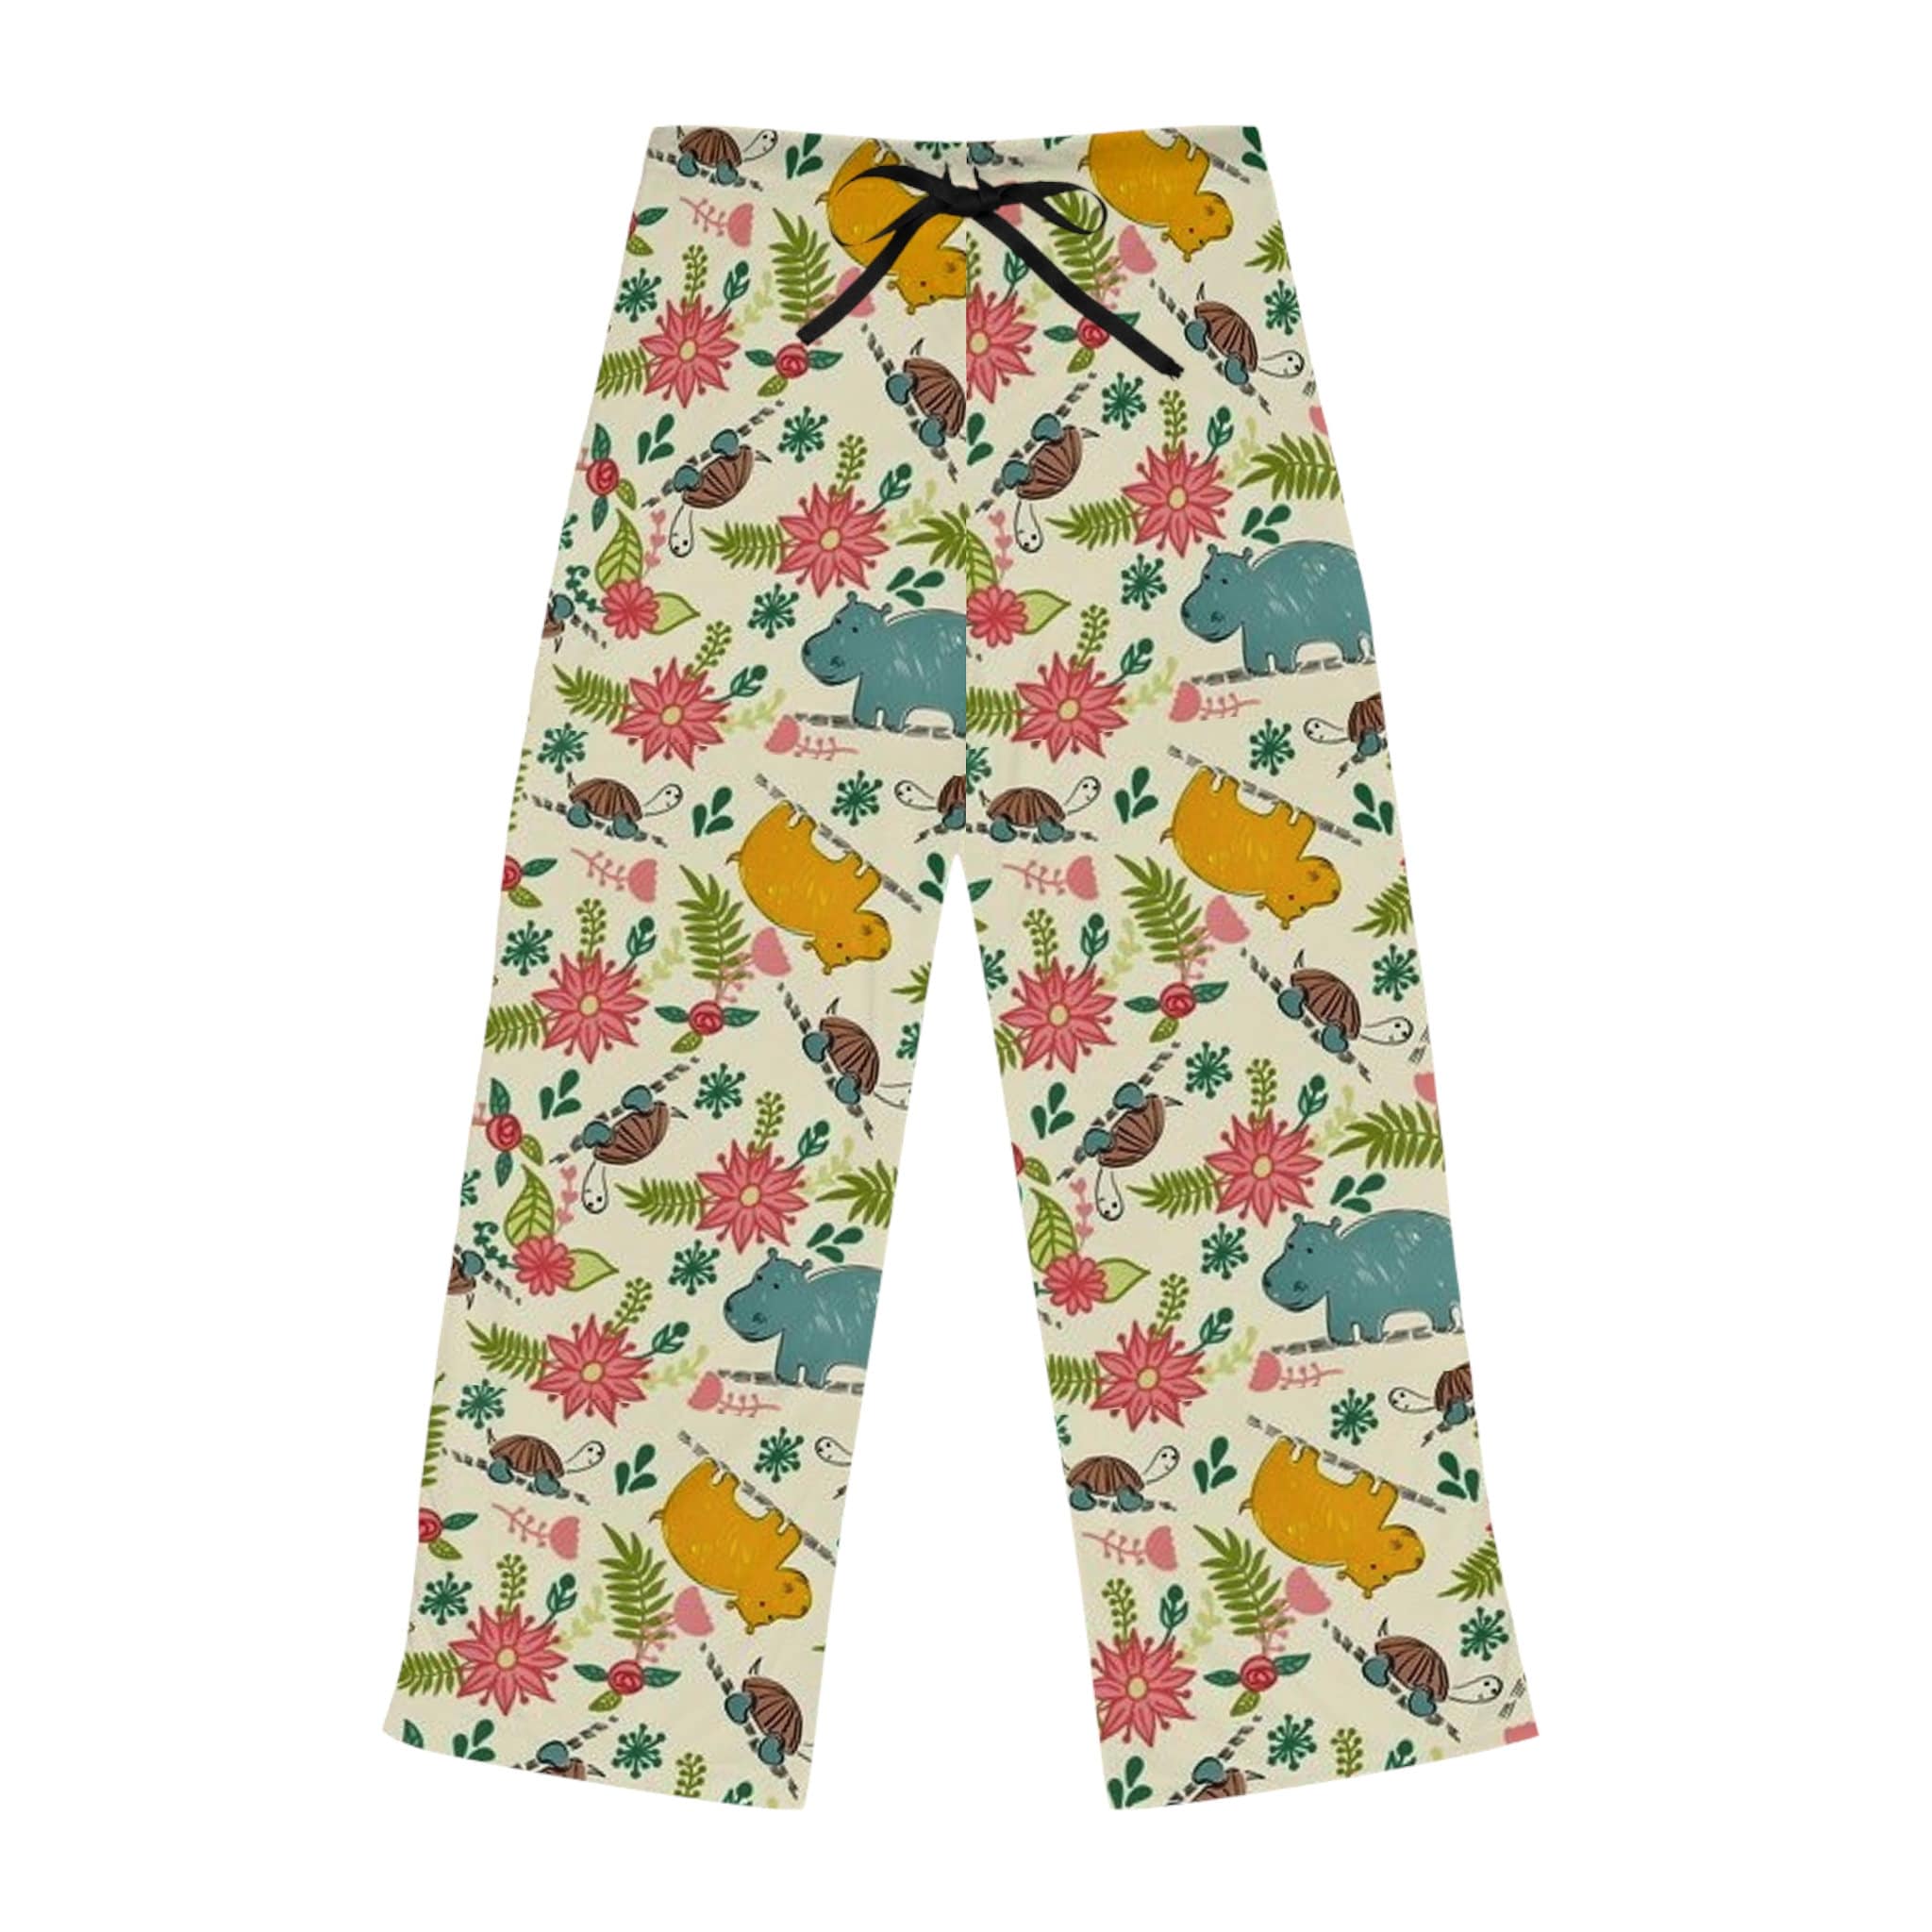 Junzan Men'S Pajama Pants Ocean Turtle Sleepwear Pants Pj Bottoms